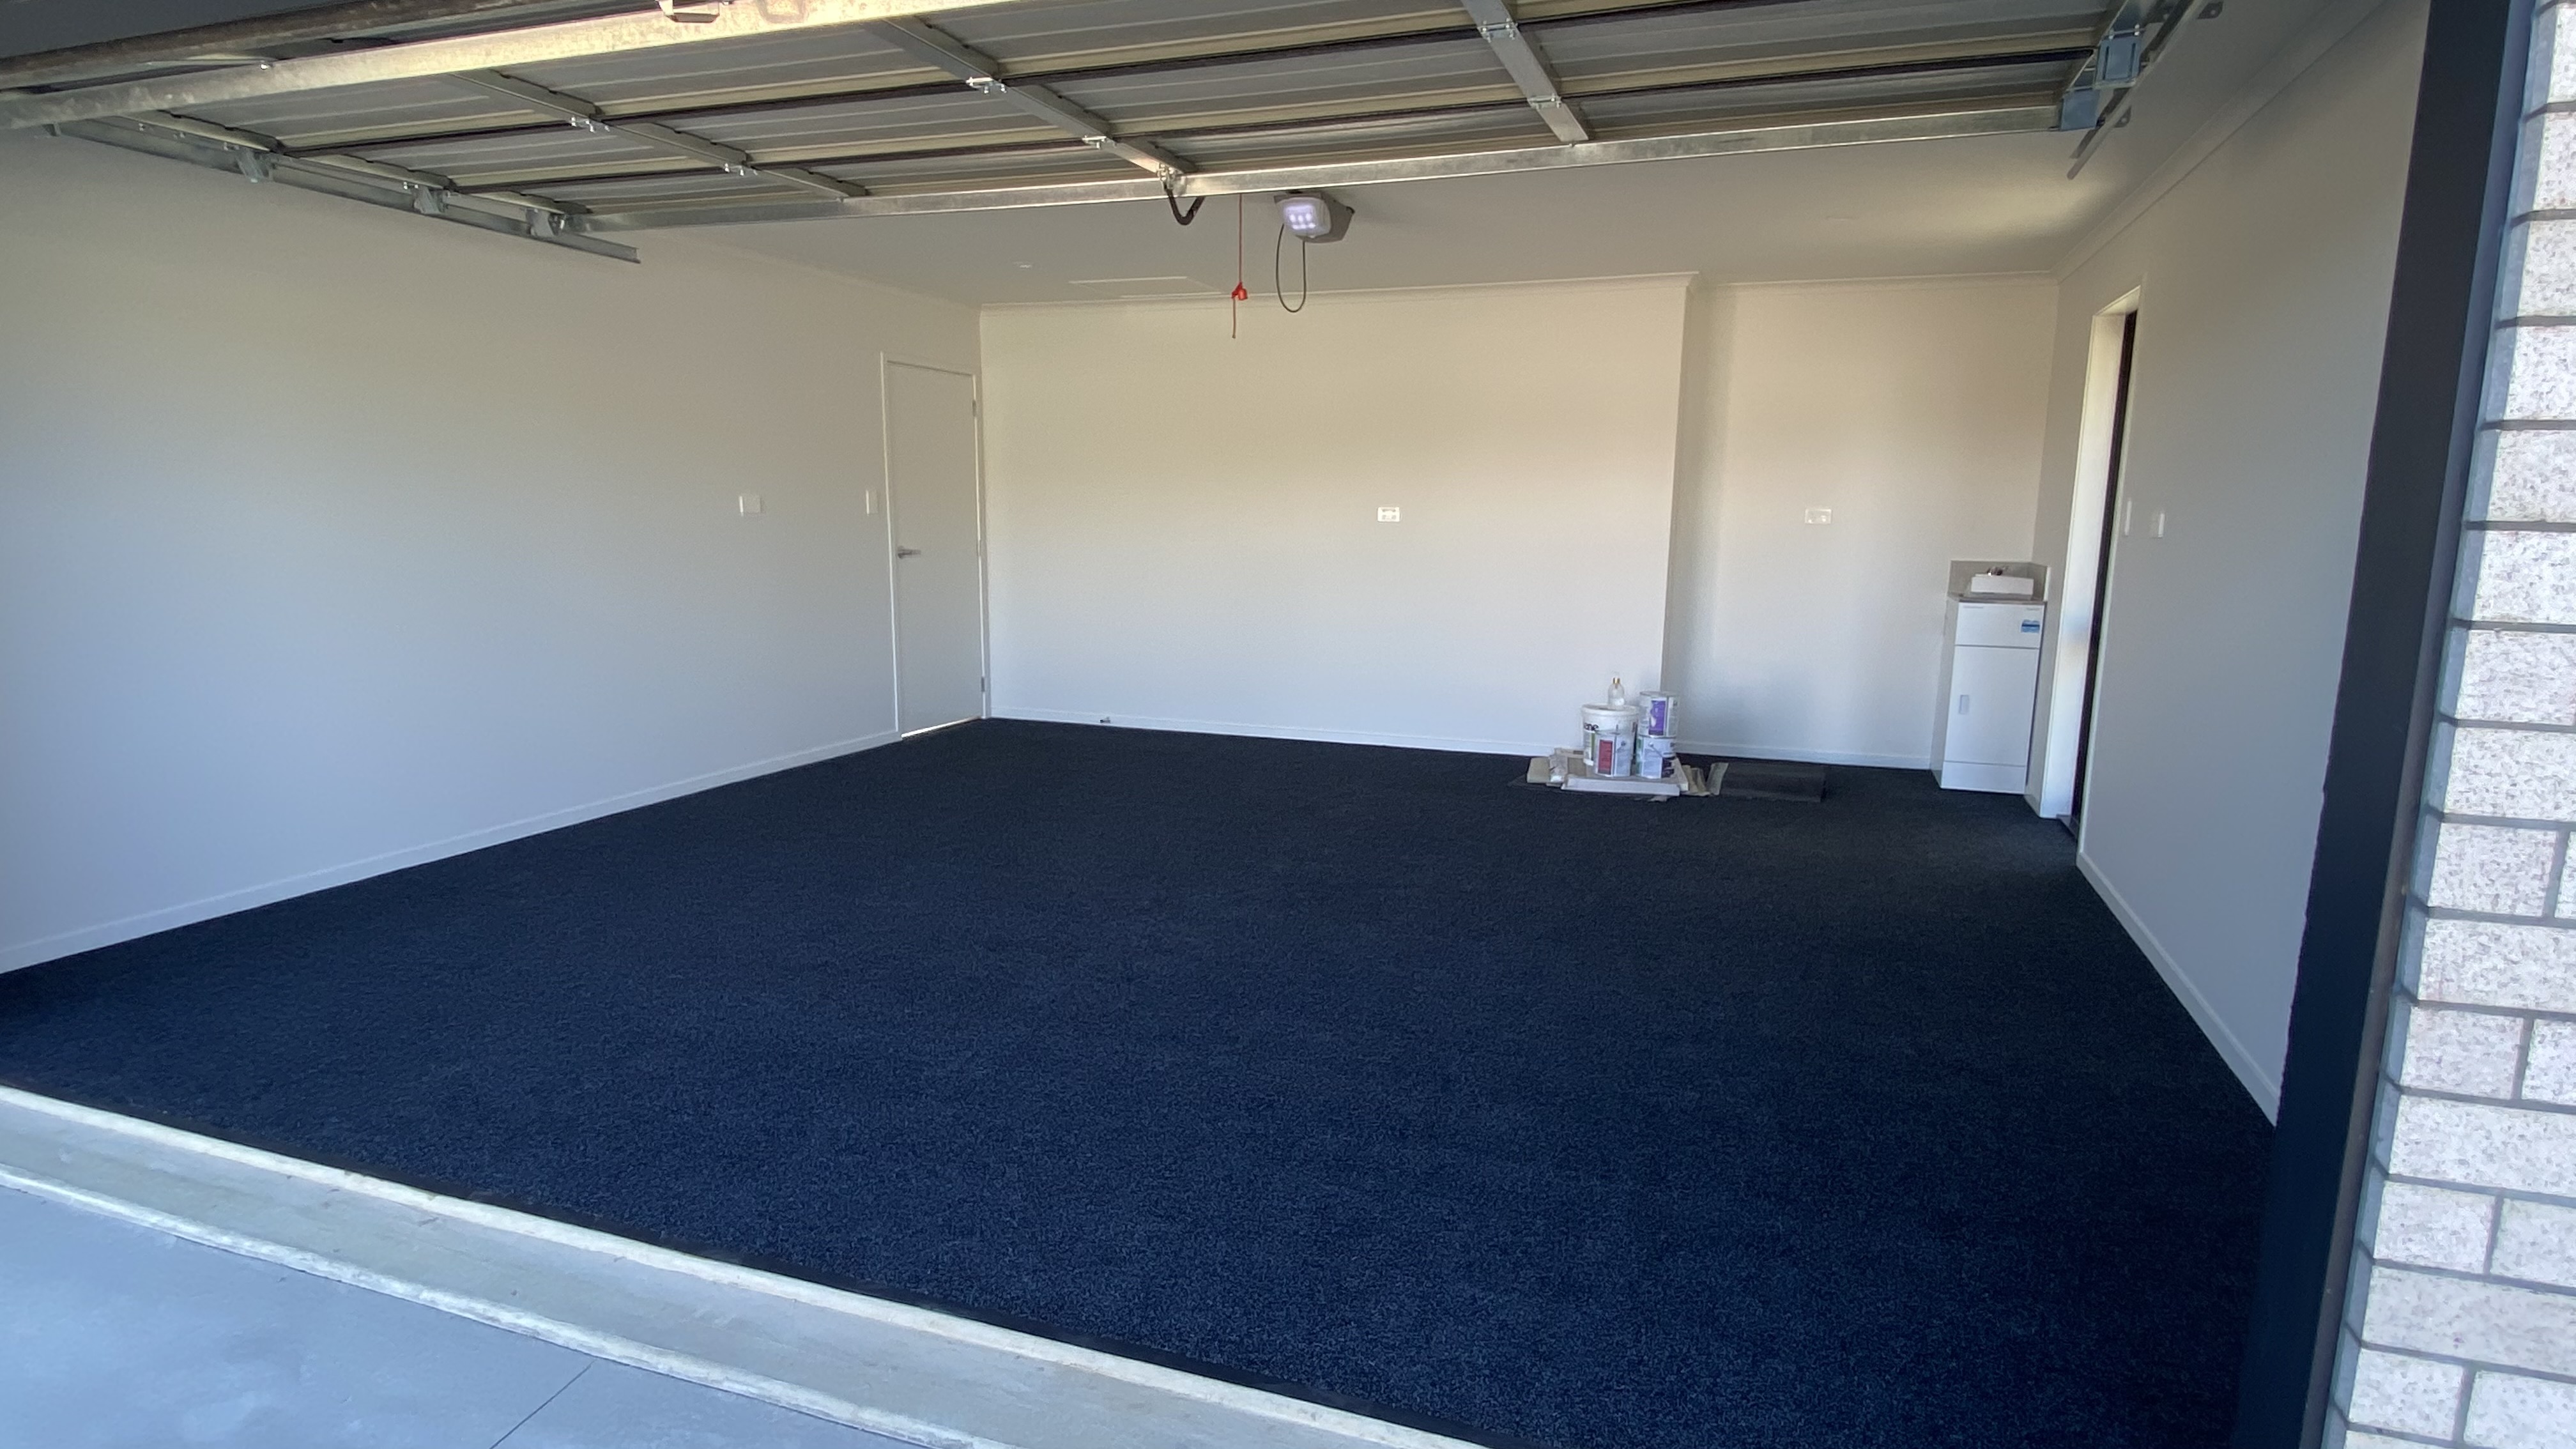 https://www.ecofloors.co.nz/images/ecofloors-garage-carpet-newzealand-6.jpg